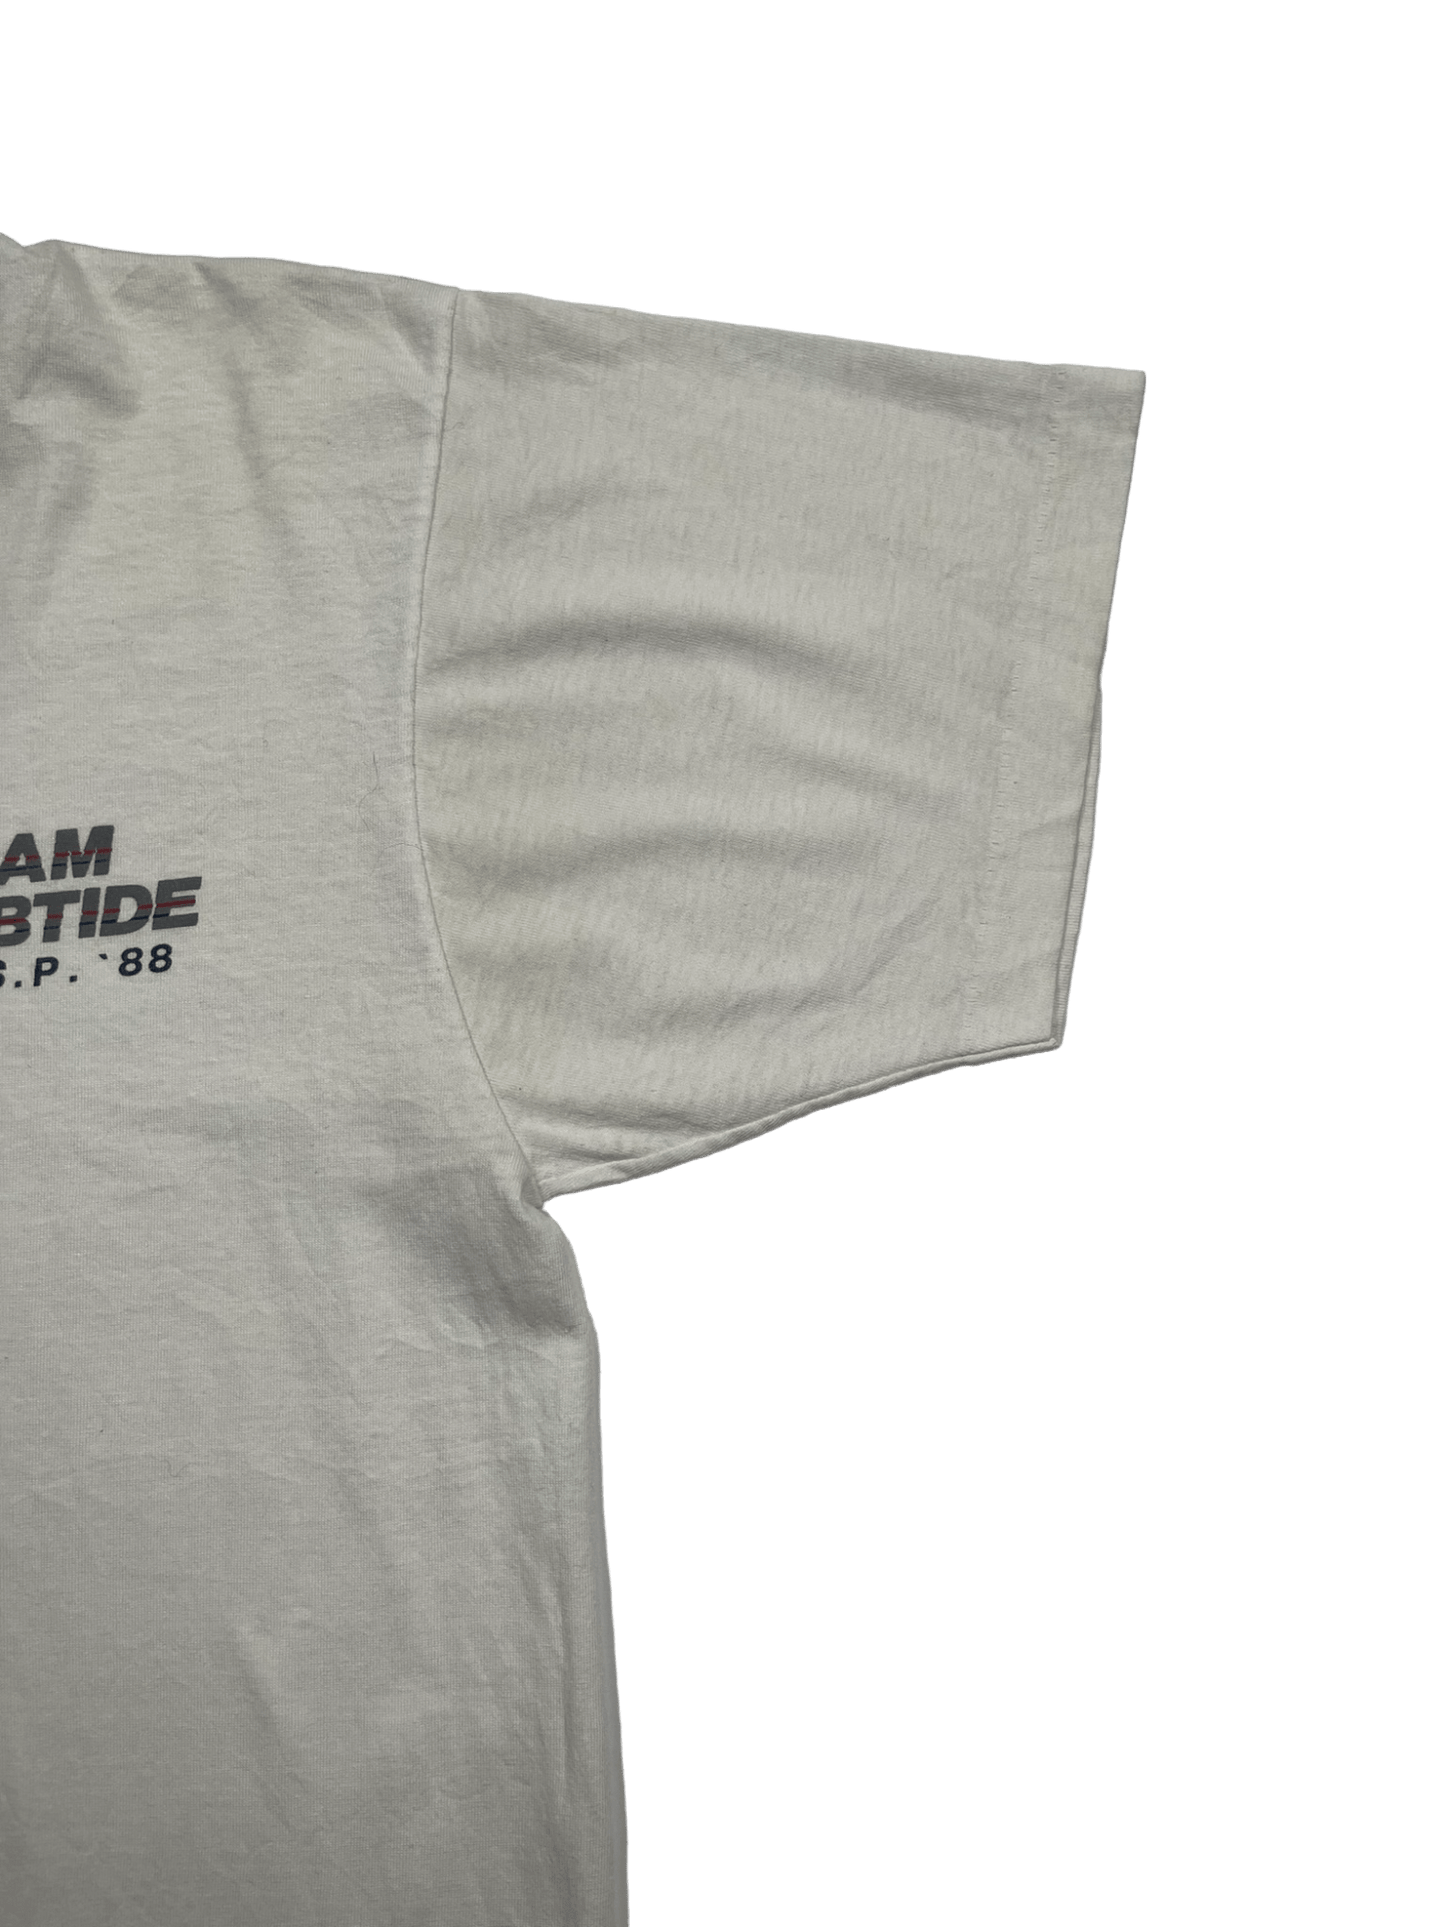 The Vintage Racks T-Shirt Team Ebbtide - L